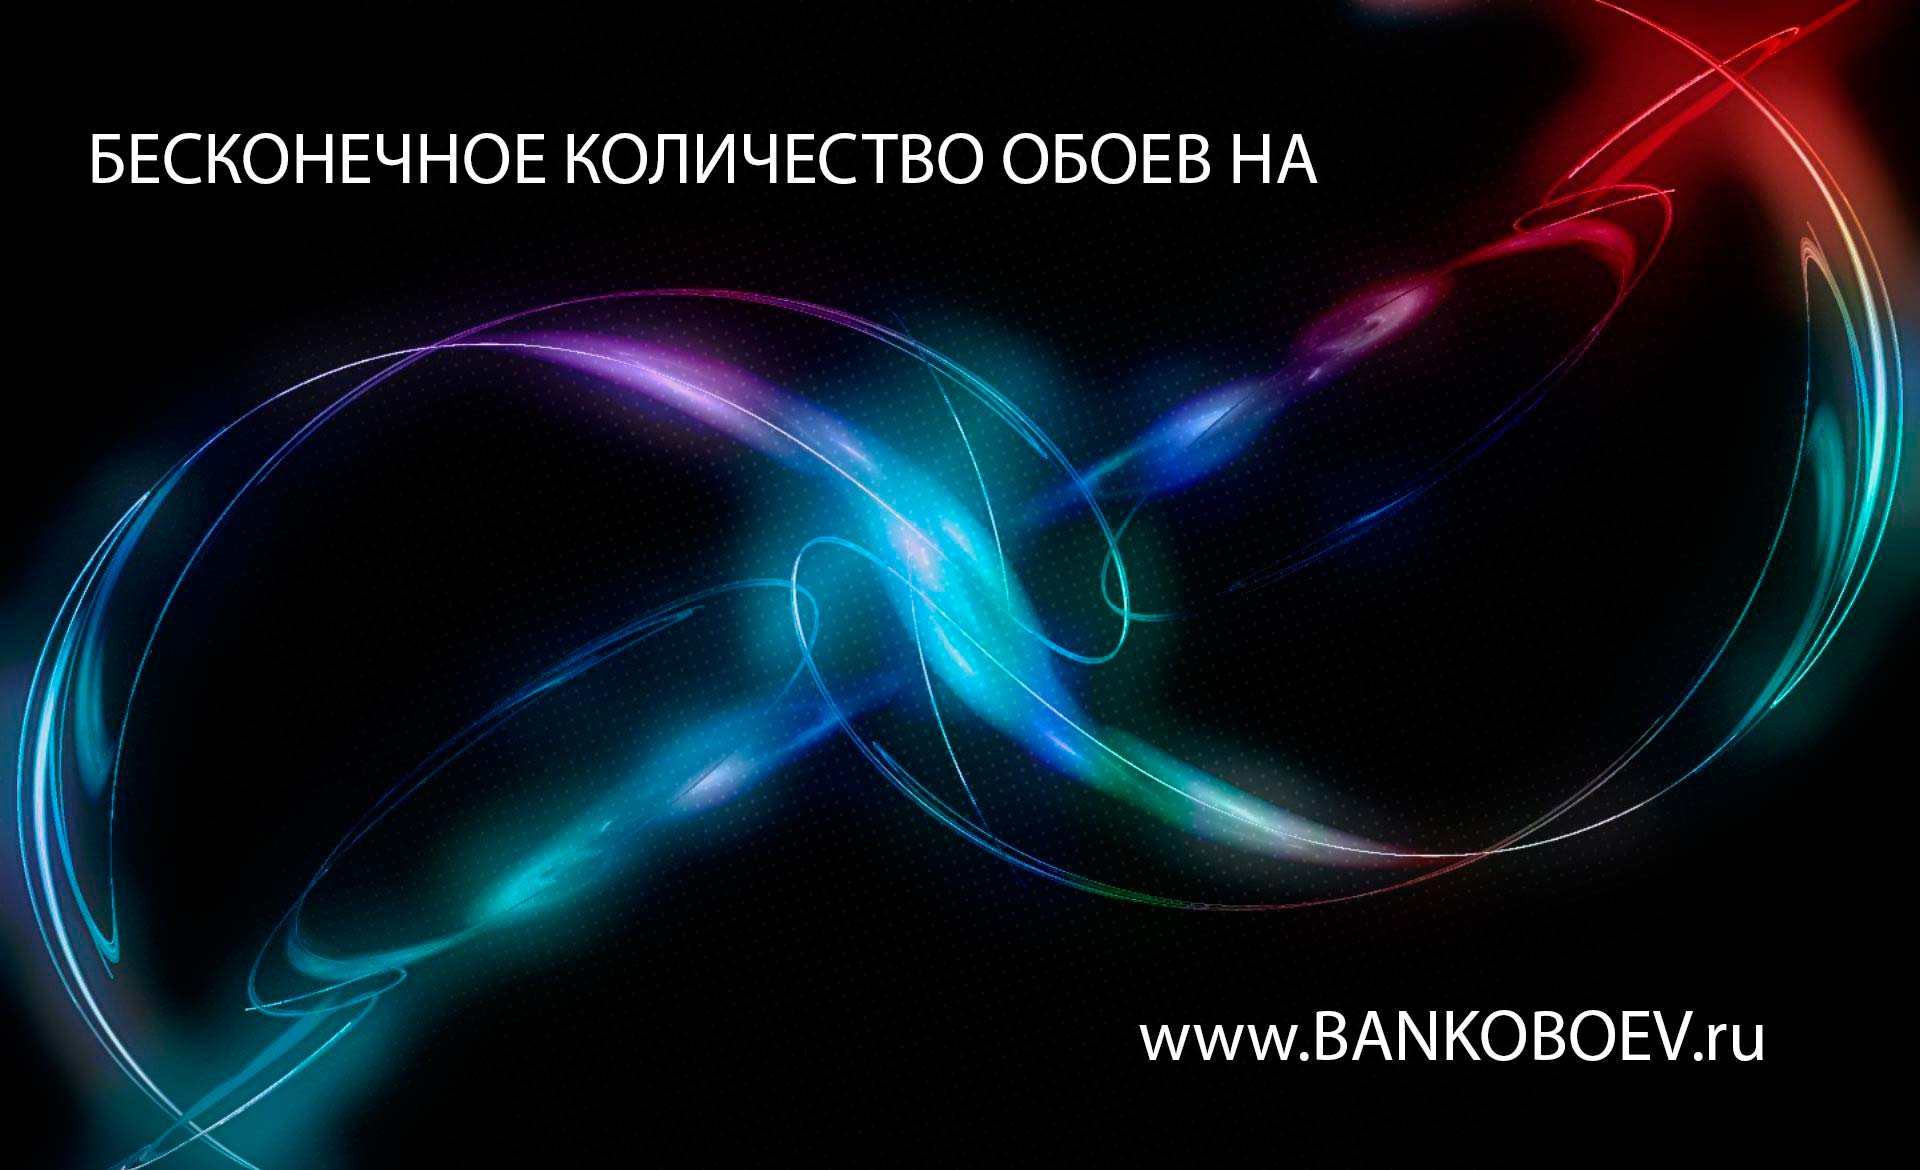 Bankoboev Ru Image Odqxmza Jpg